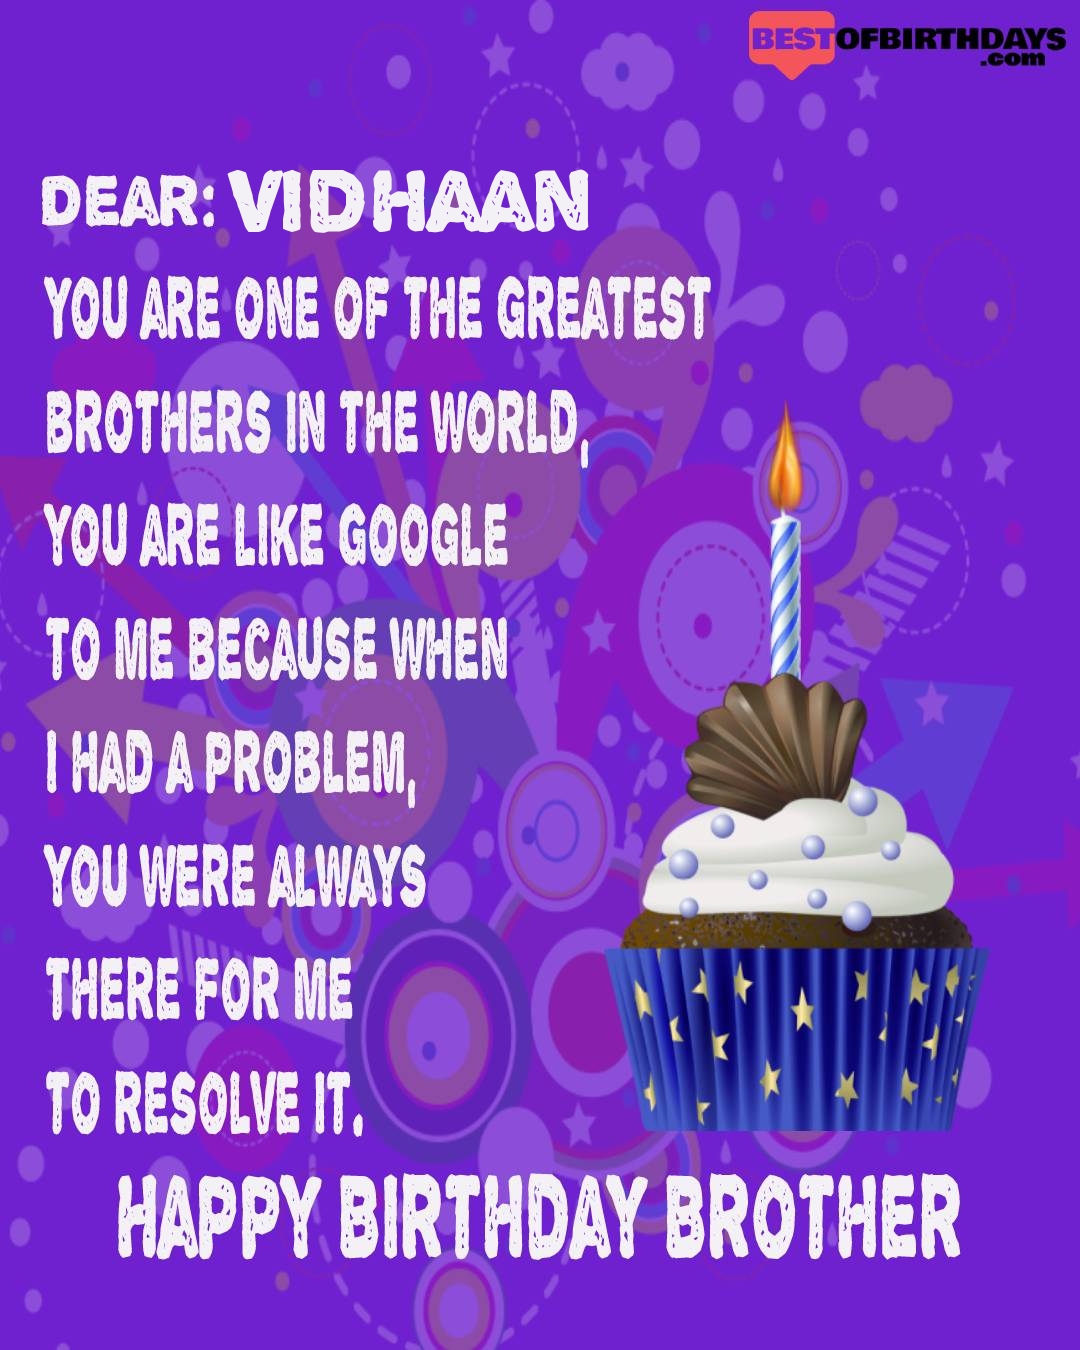 Happy birthday vidhaan bhai brother bro